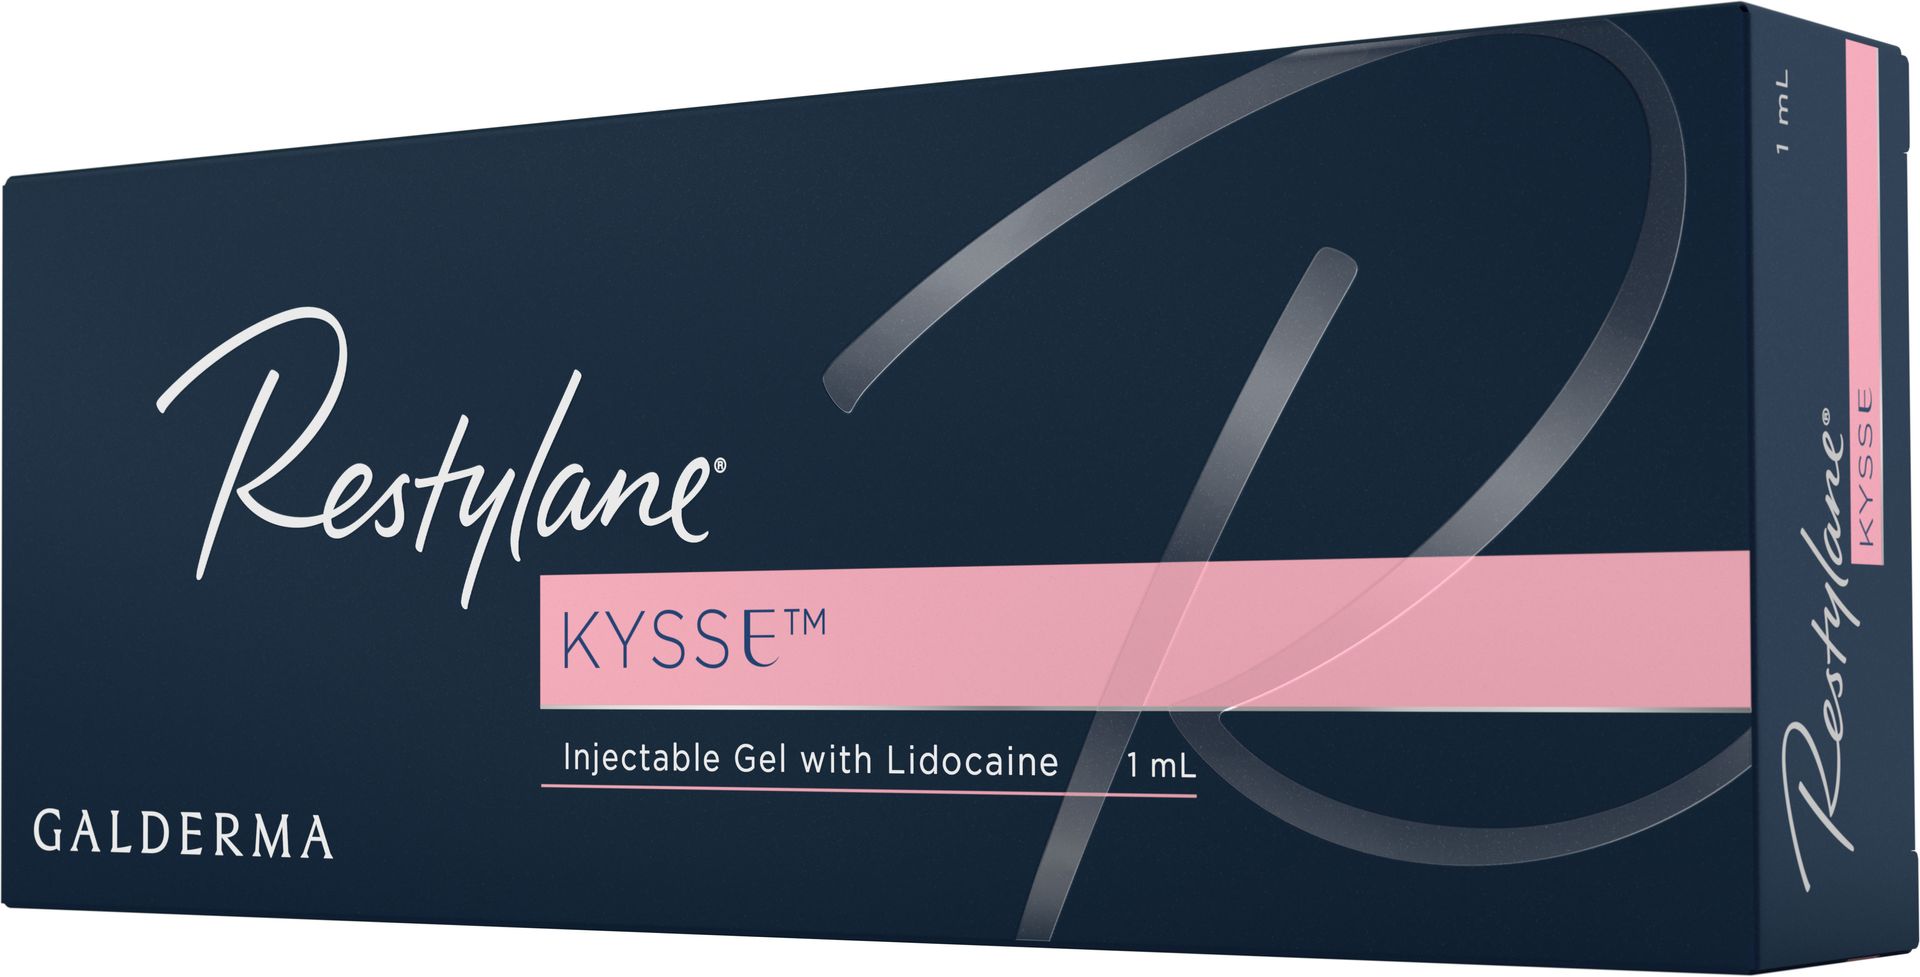 A box of restylane kysse by galderma